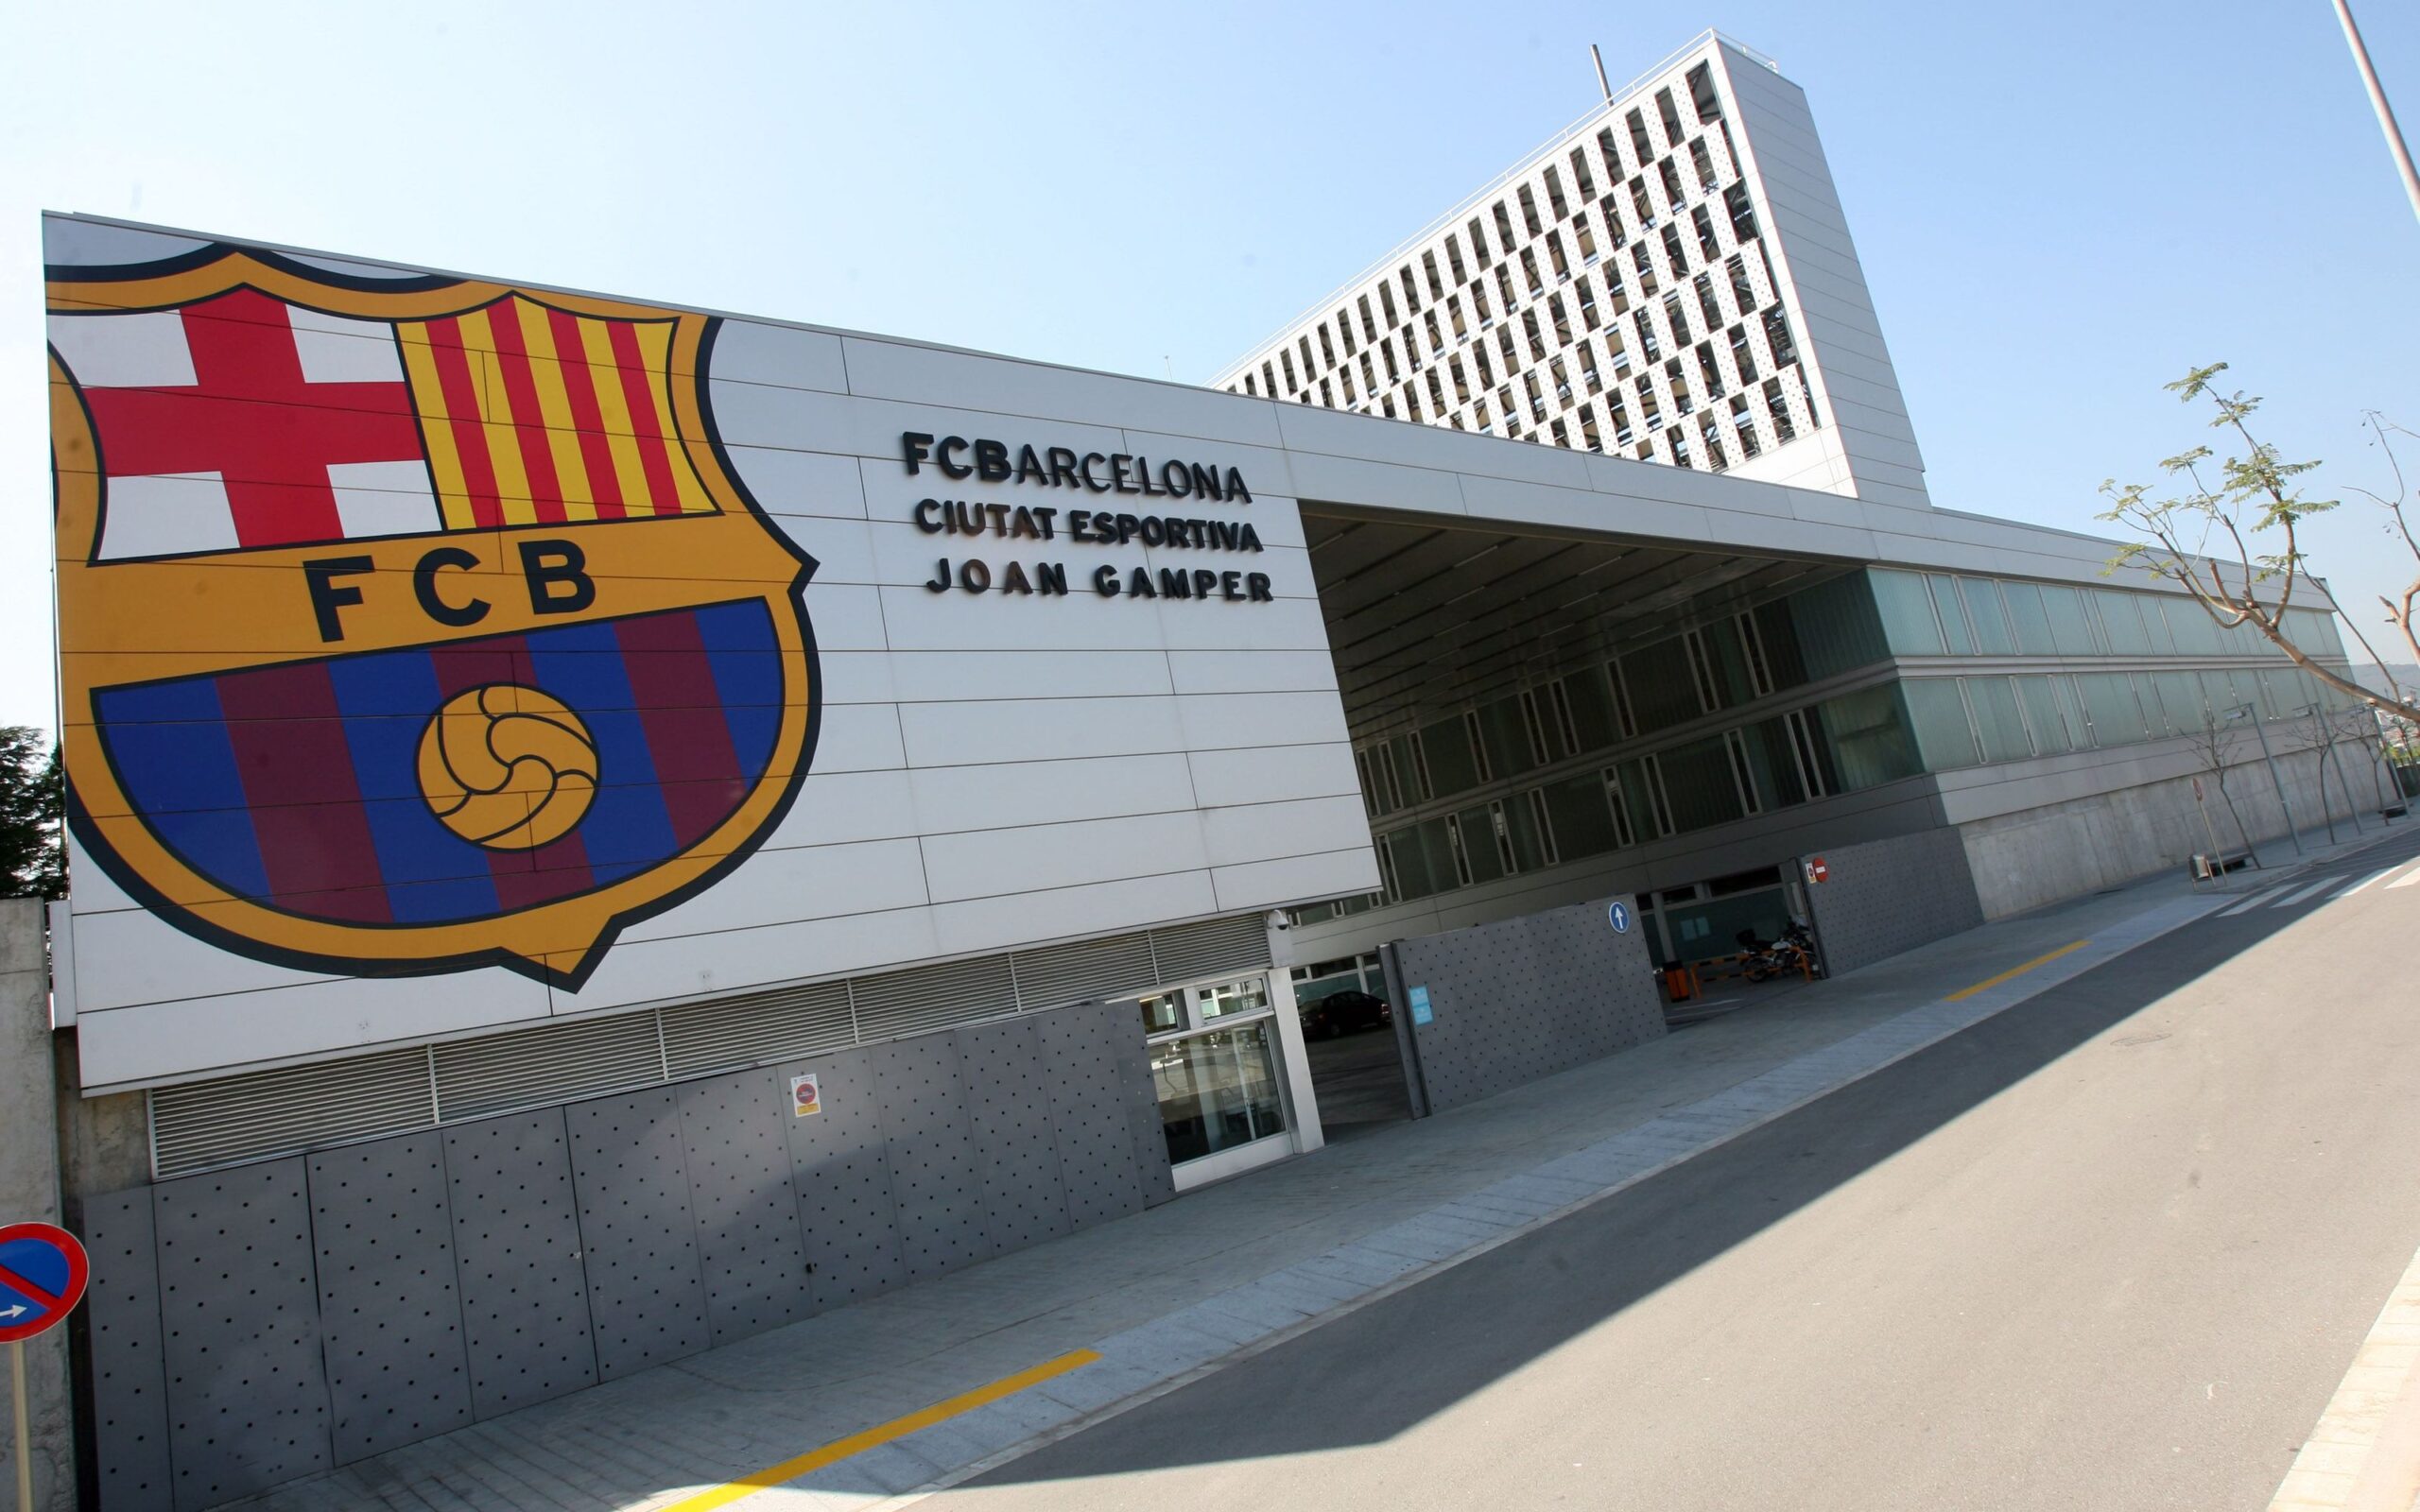 Messi used to train at the Ciutat Esportiva Joan Gamper